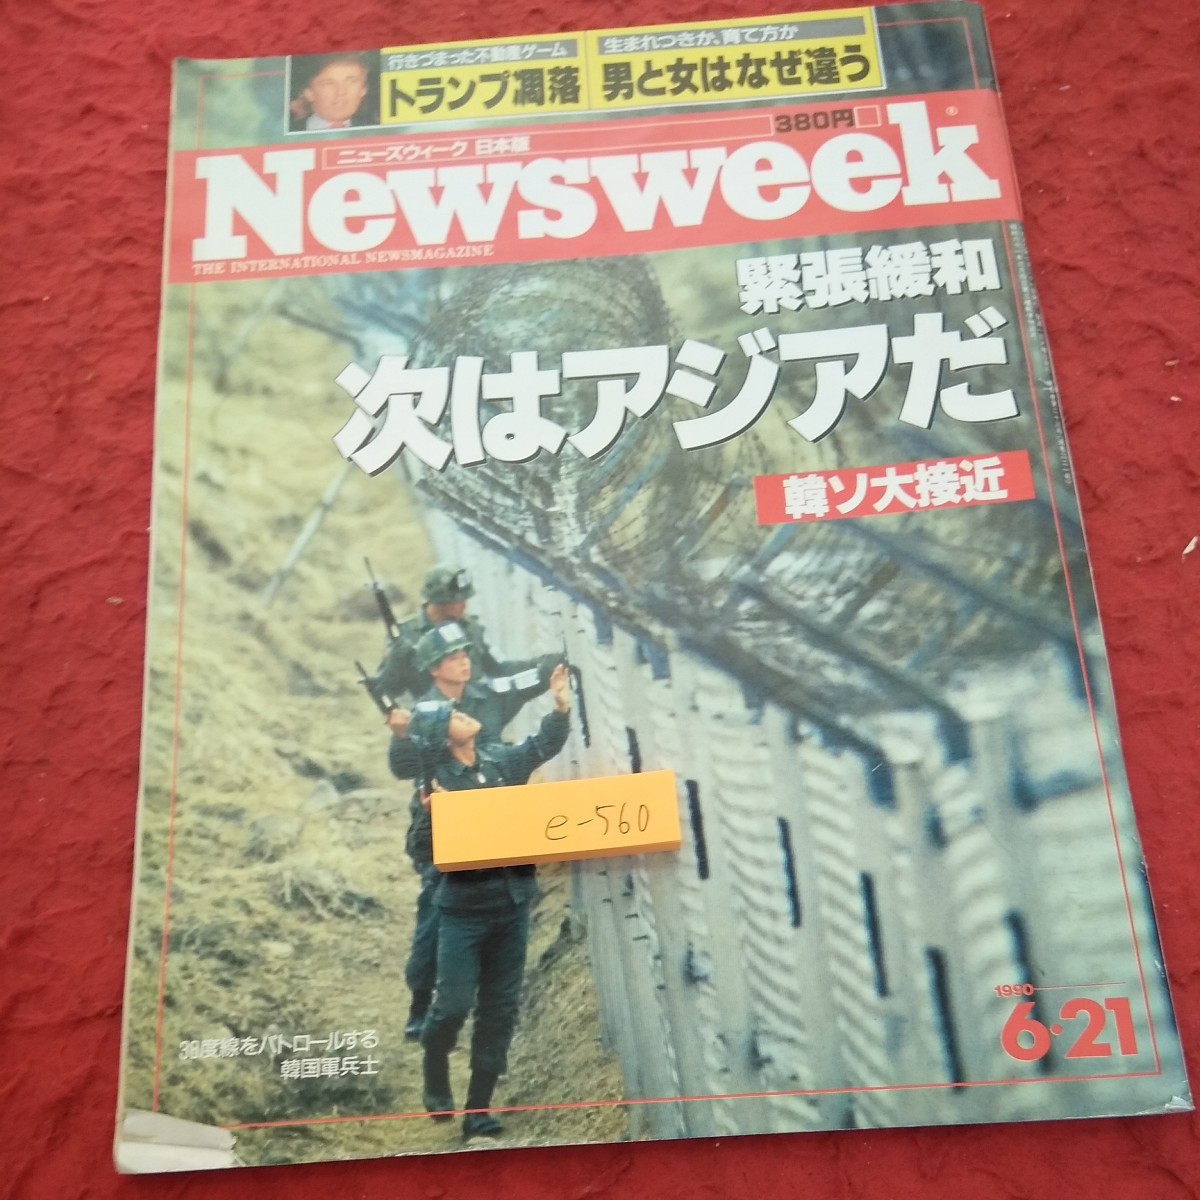 e-560 Newsweek 緊急緩和 次はアジアだ 韓ソ大接近 トランプ凋落 男と女はなぜ違う など 1990年発行 TBSブリタニカ※1_傷あり